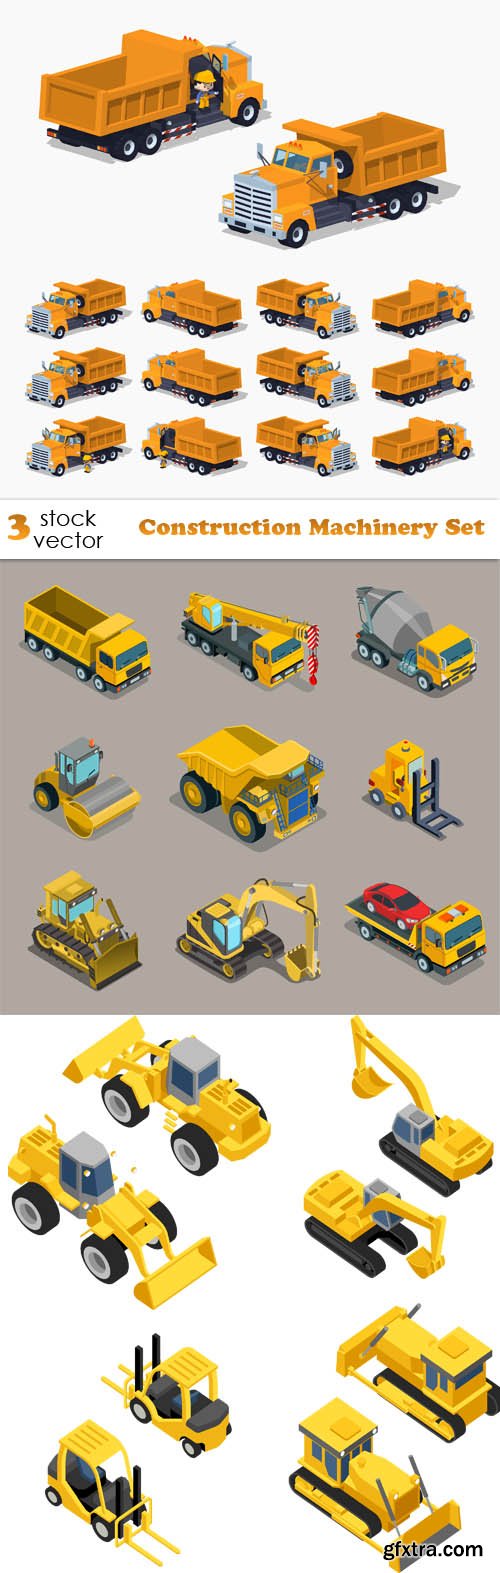 Vectors - Construction Machinery Set